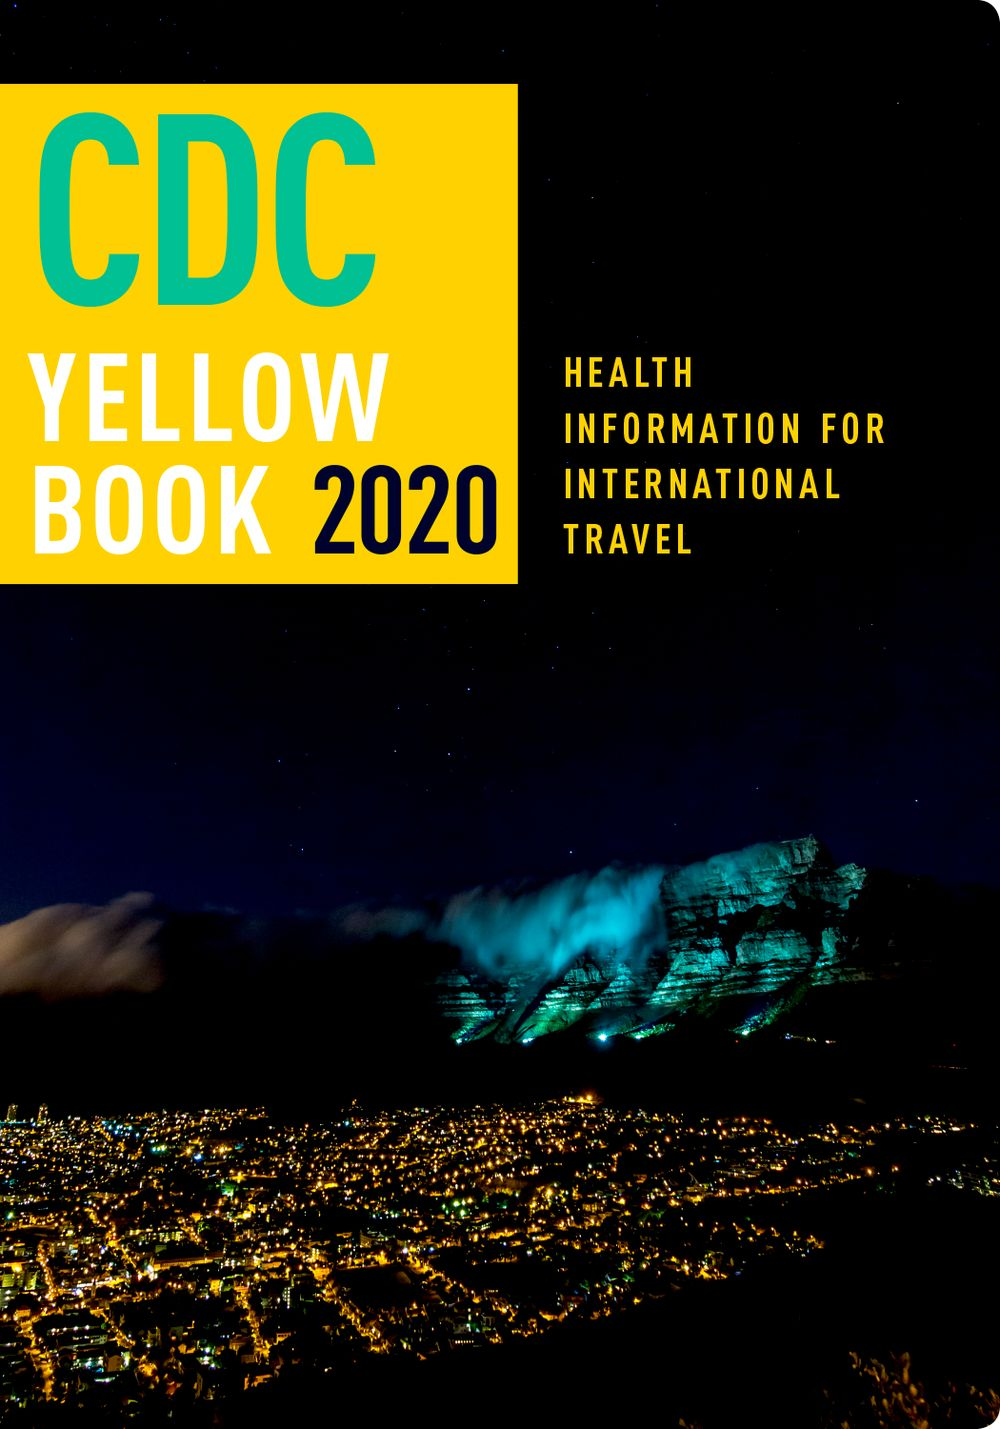 CDC Yellow Book